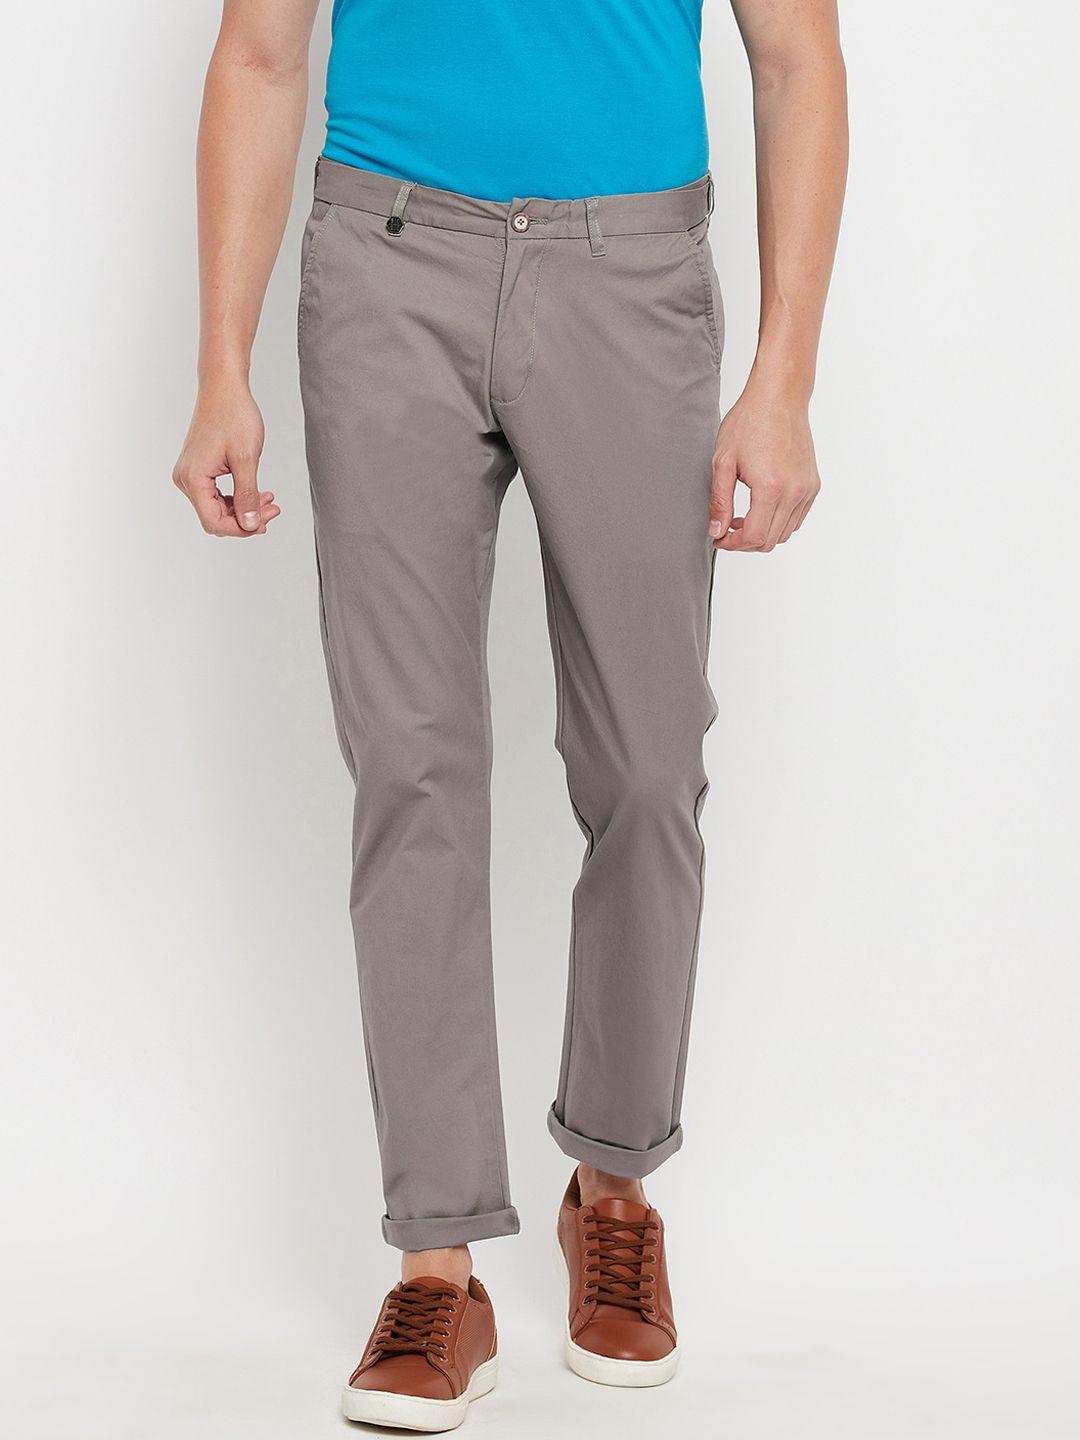 duke-men-grey-slim-fit-cotton-chinos-trousers